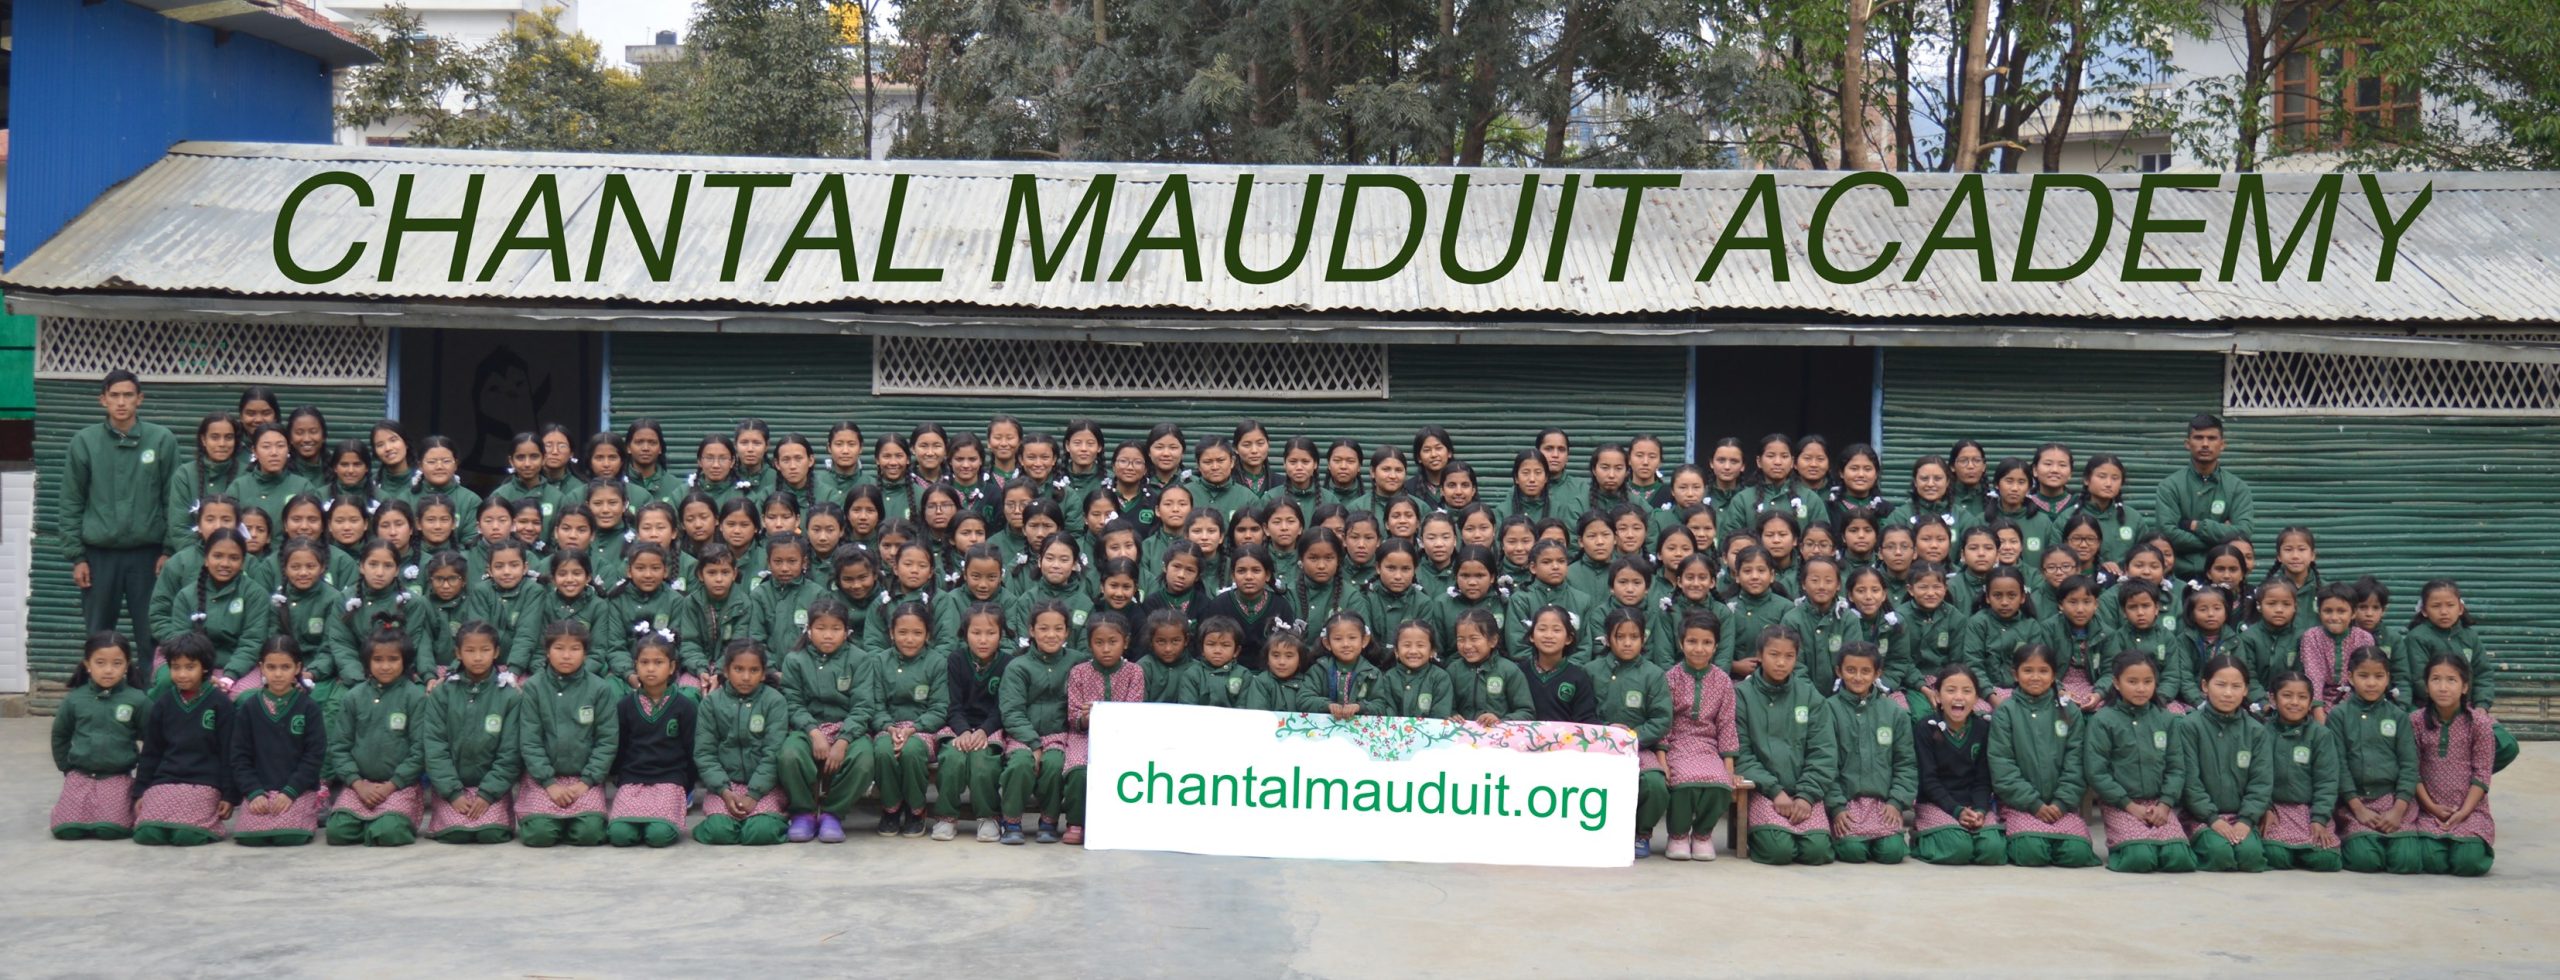 Chantal Mauduit Academy